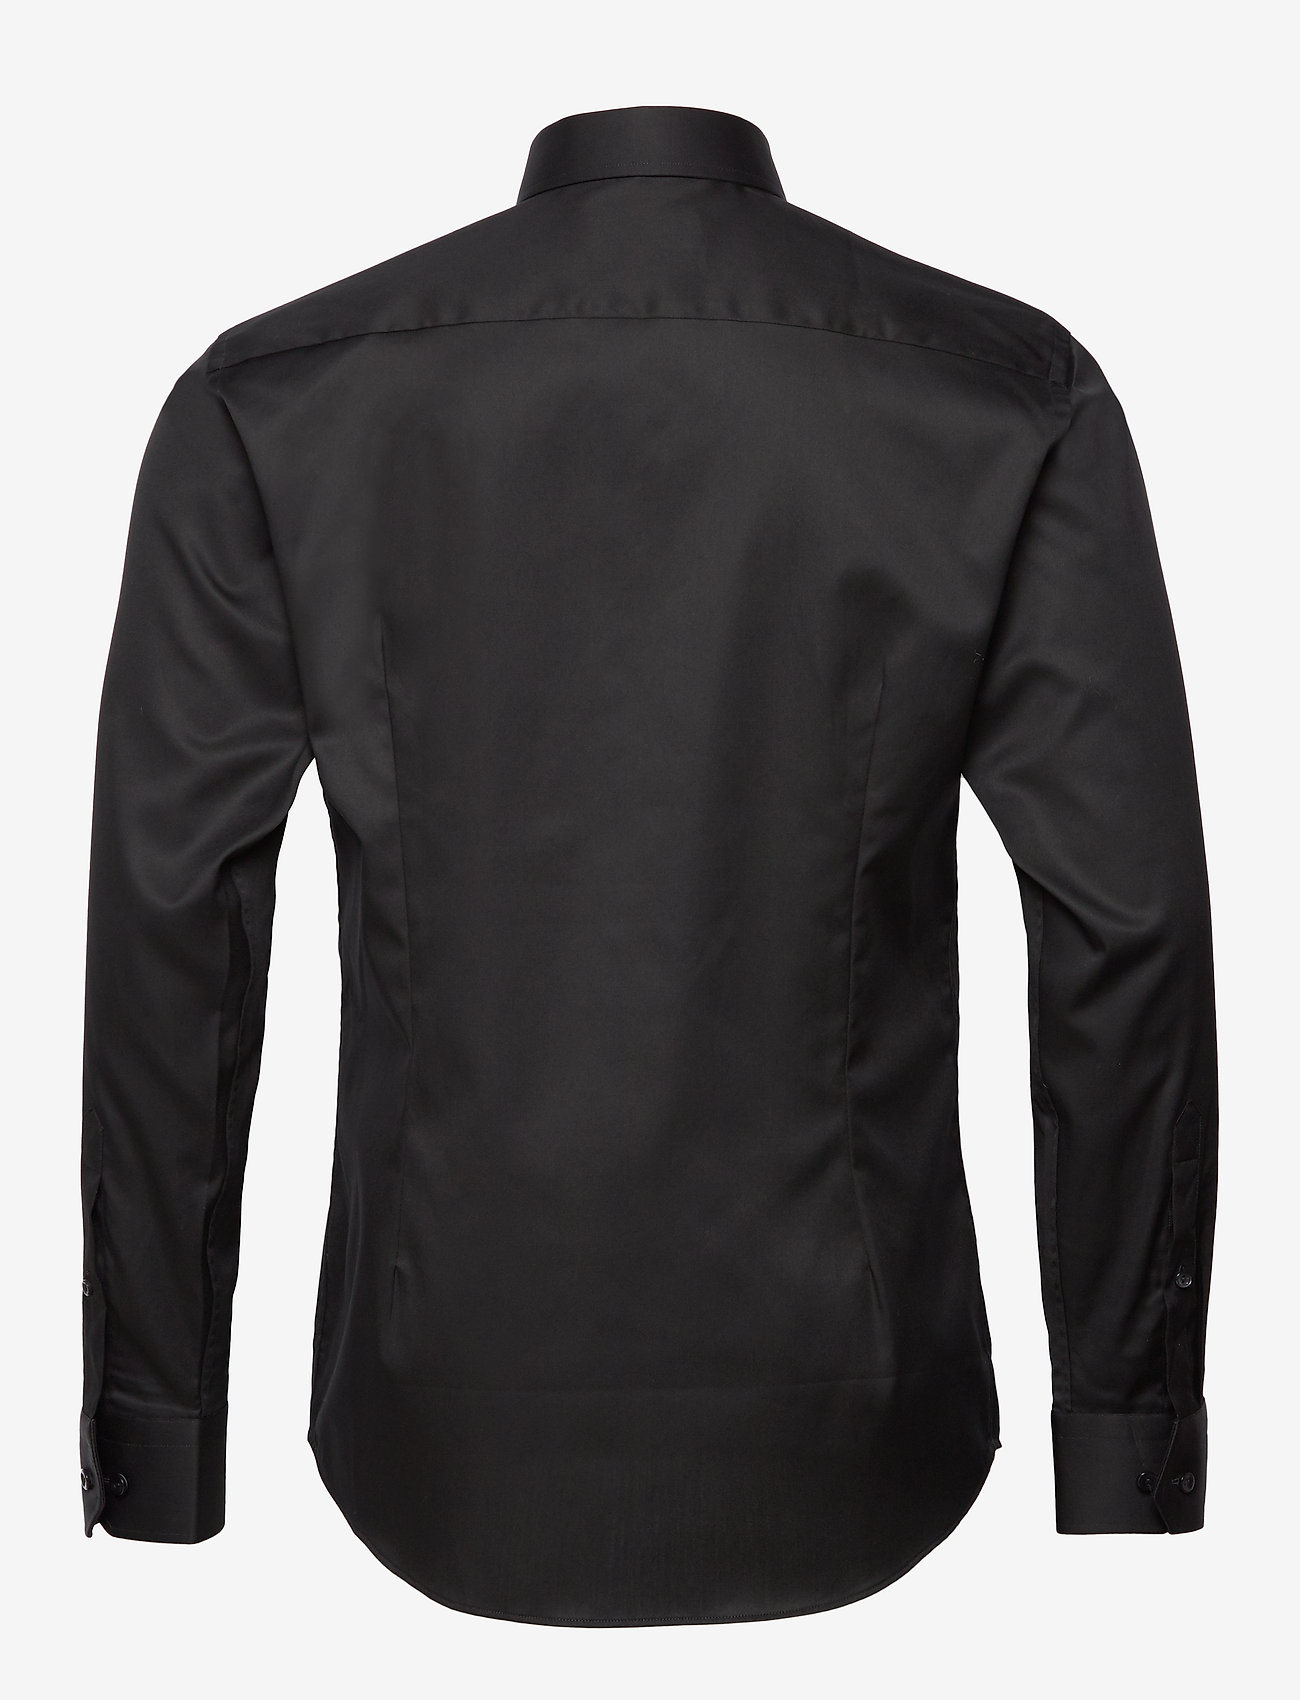 Eton - Cambridge-Collection-Slim fit - basic-hemden - black - 1